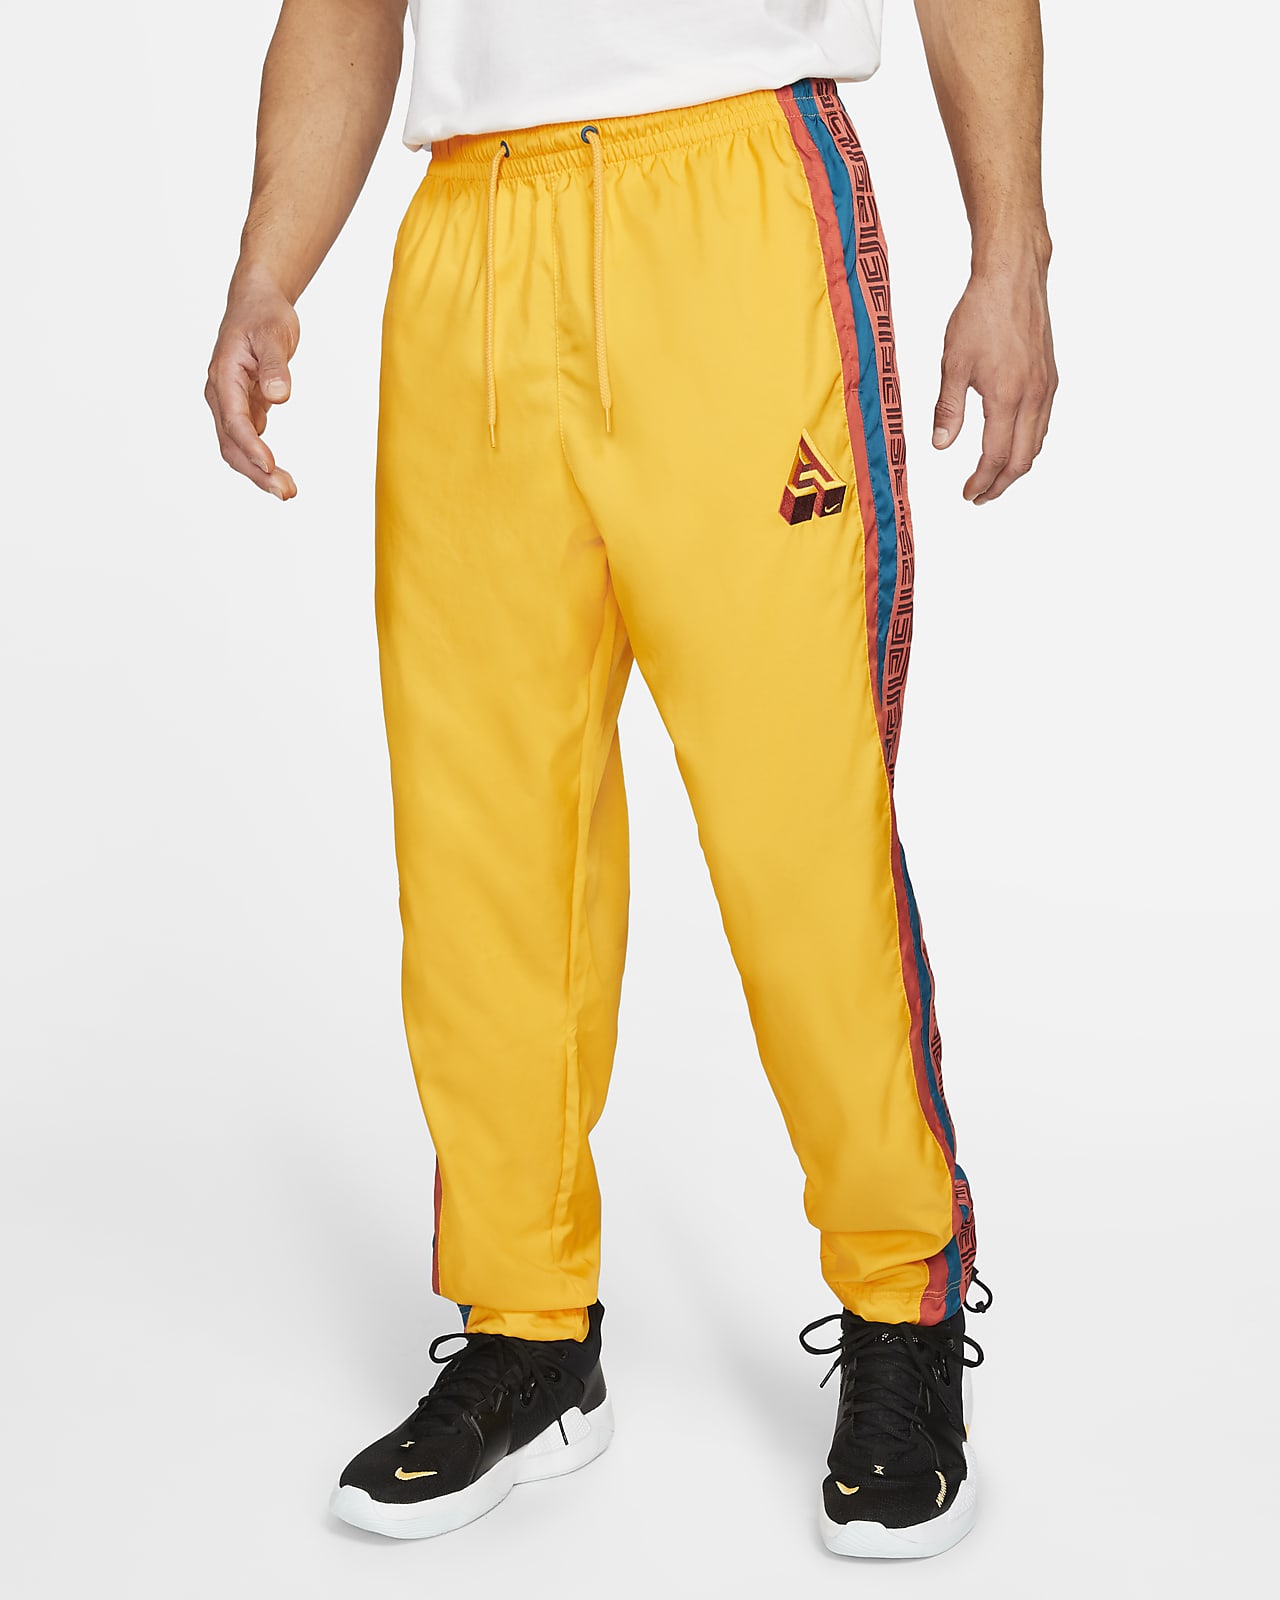 yellow nike track pants